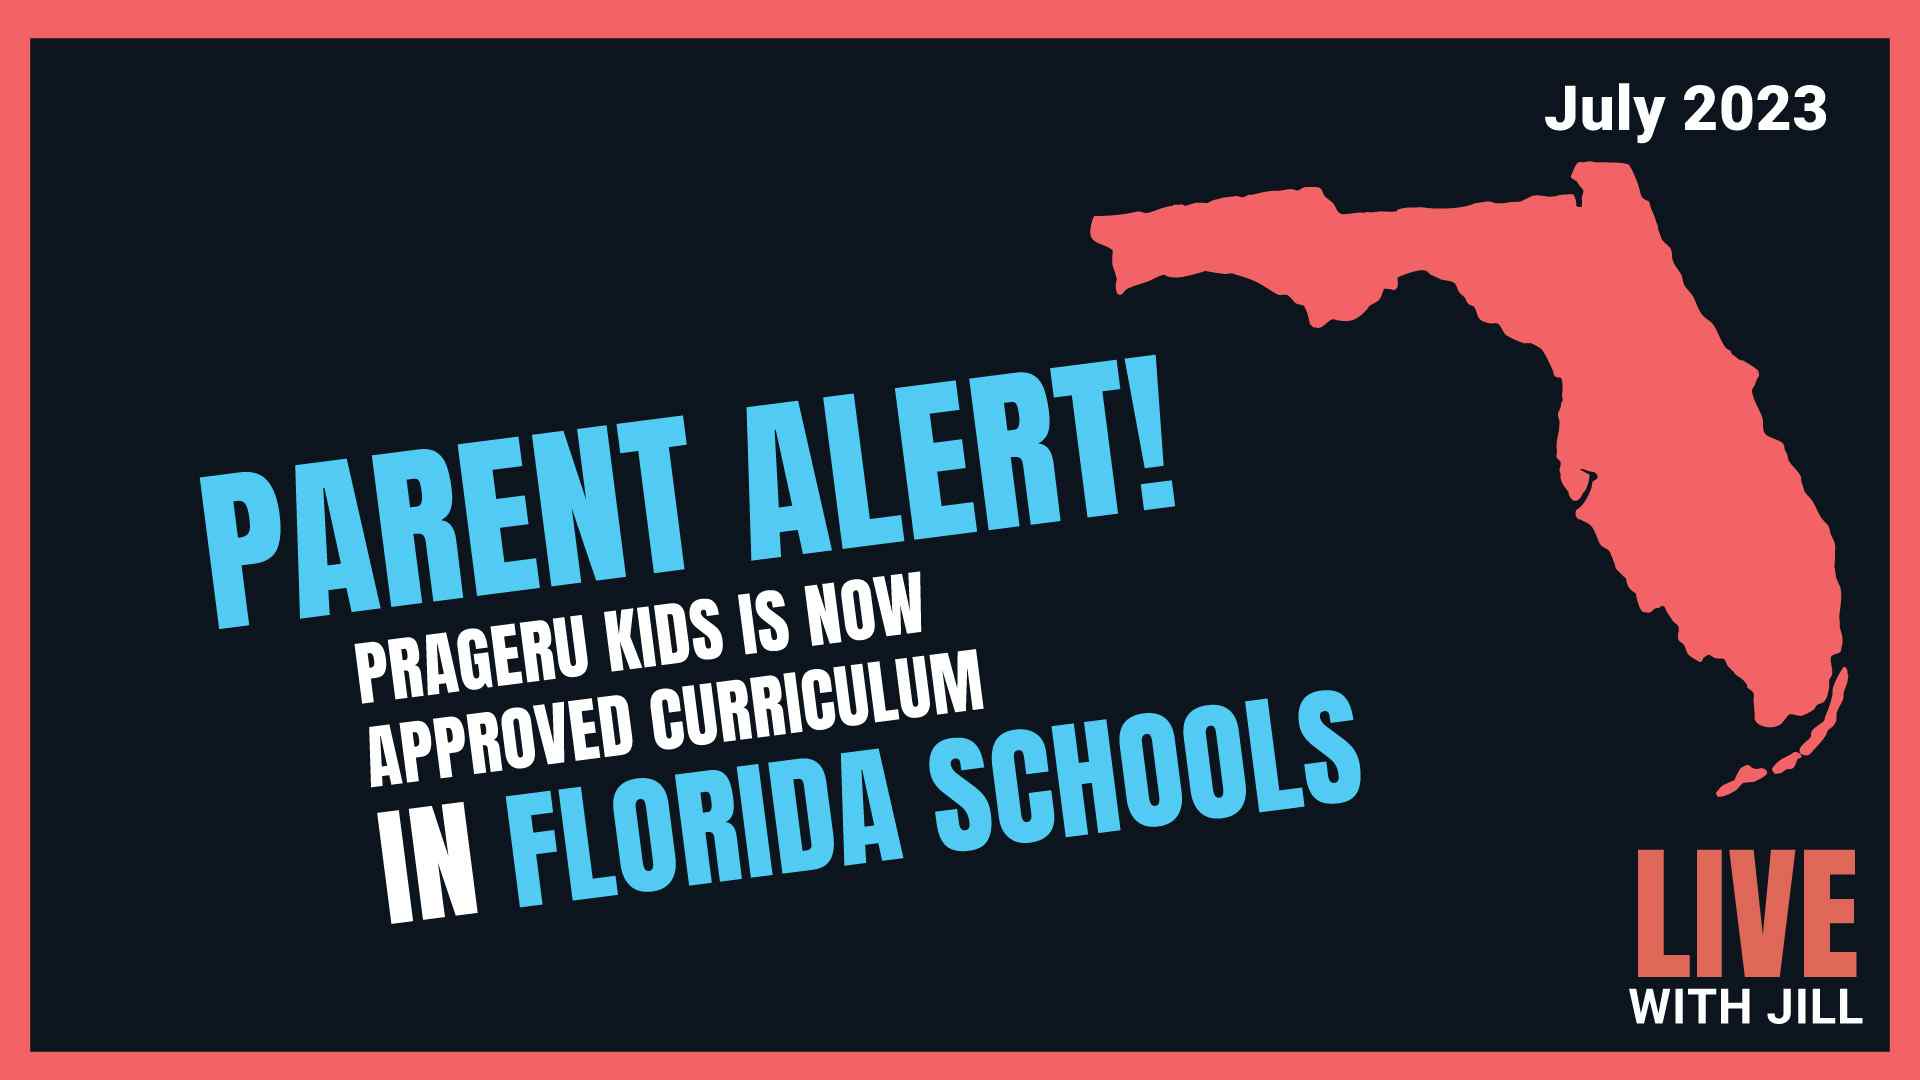 Parent Alert: PragerU Kids Is Now Approved Curriculum in Florida Schools